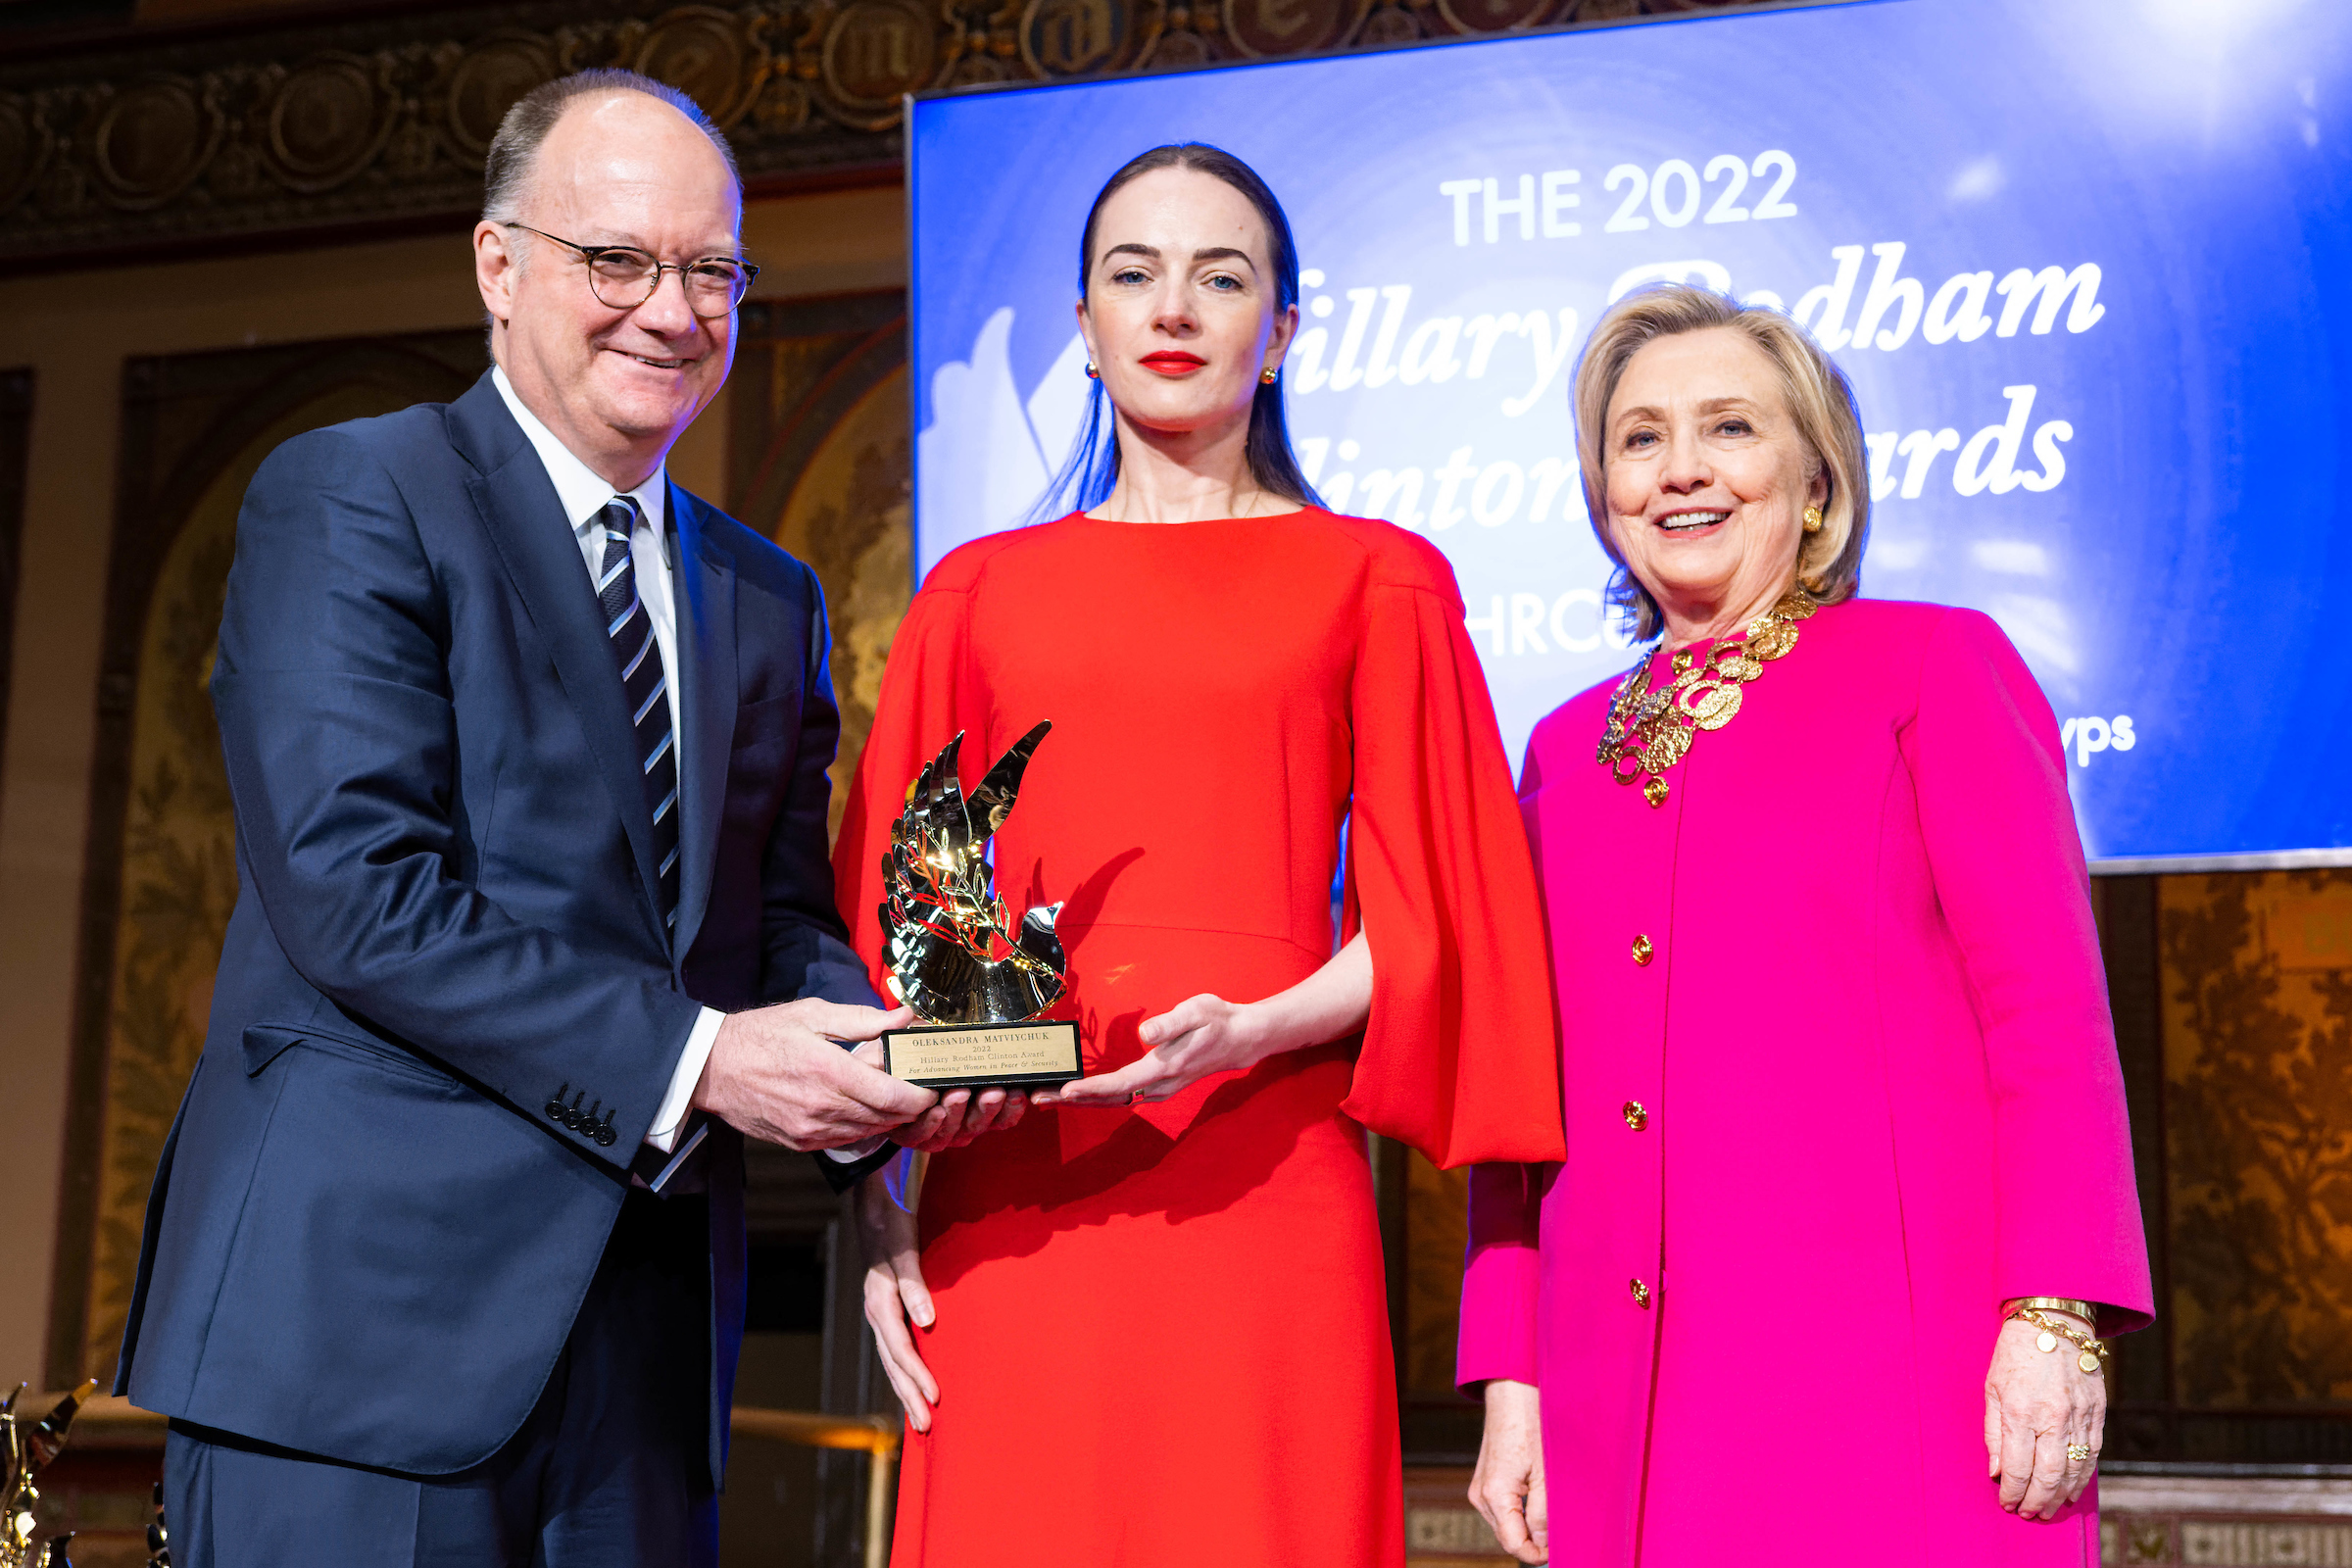 Jack DeGioia, Oleksandra Matviychuk and Hillary Clinton hold an award onstage